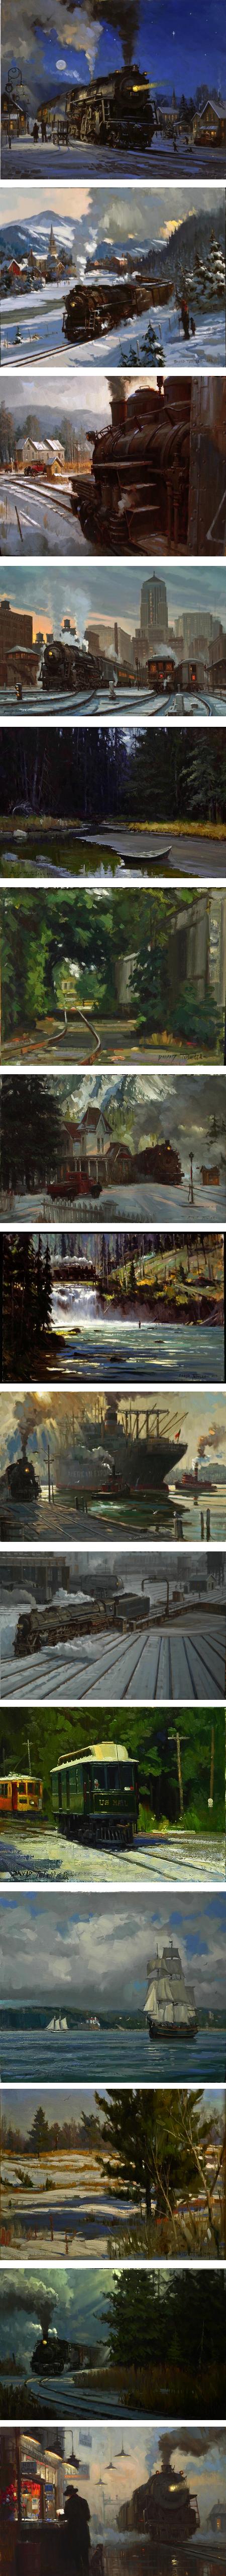 David Tutwiler, trains, landscape paintings